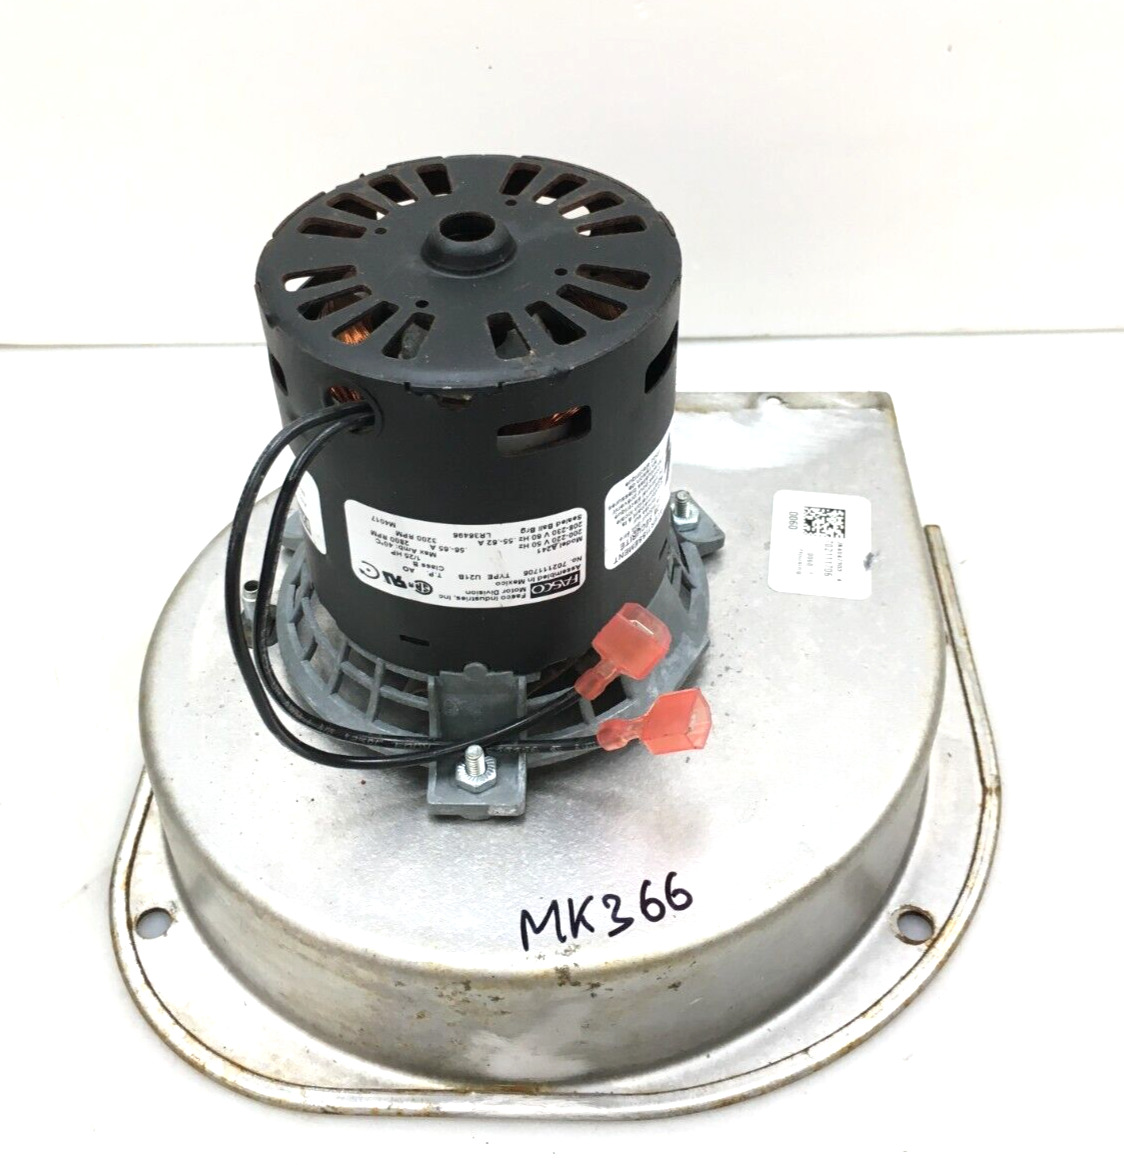 Fasco Model A241 702111706 Furnace Draft Inducer Motor 230V 2800 RPM used #MK366